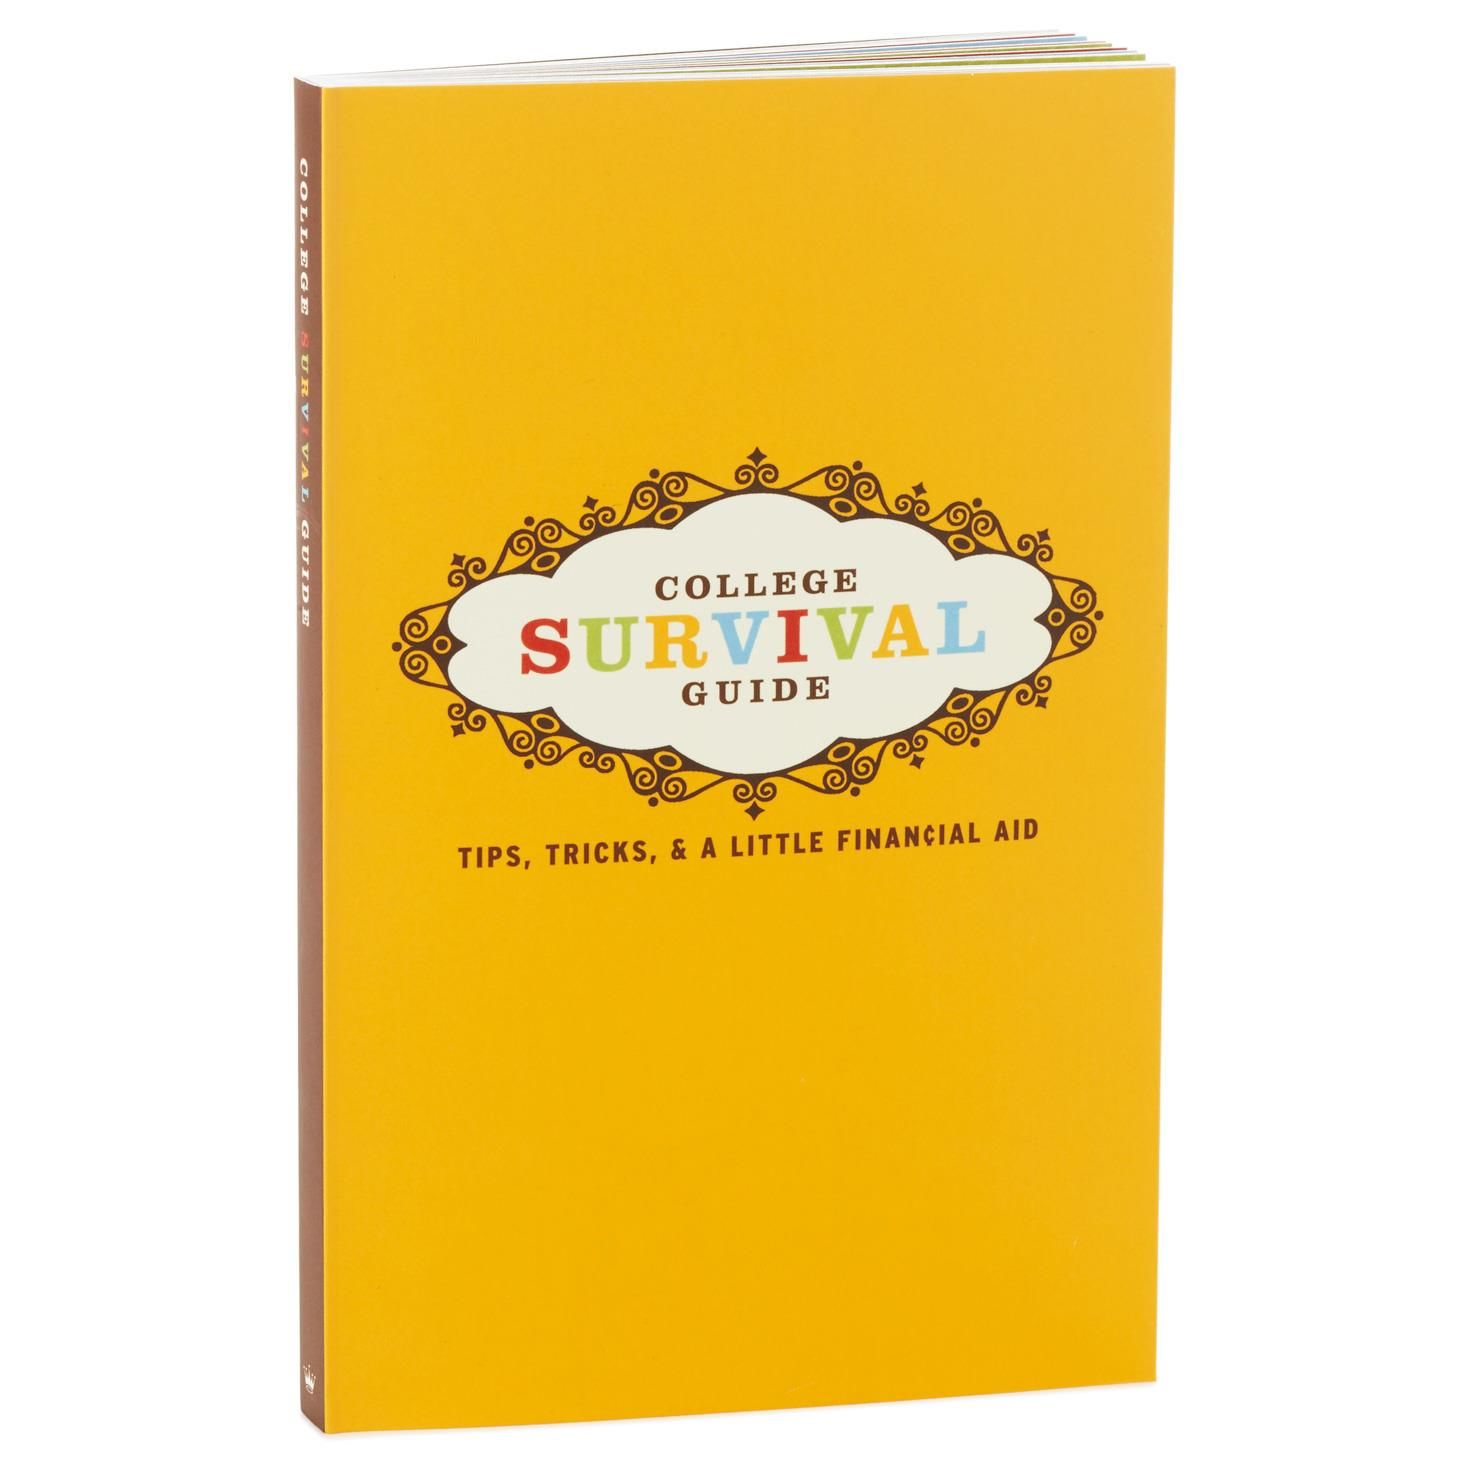 College Survival Guide Gift Book - Gift Books - Hallmark